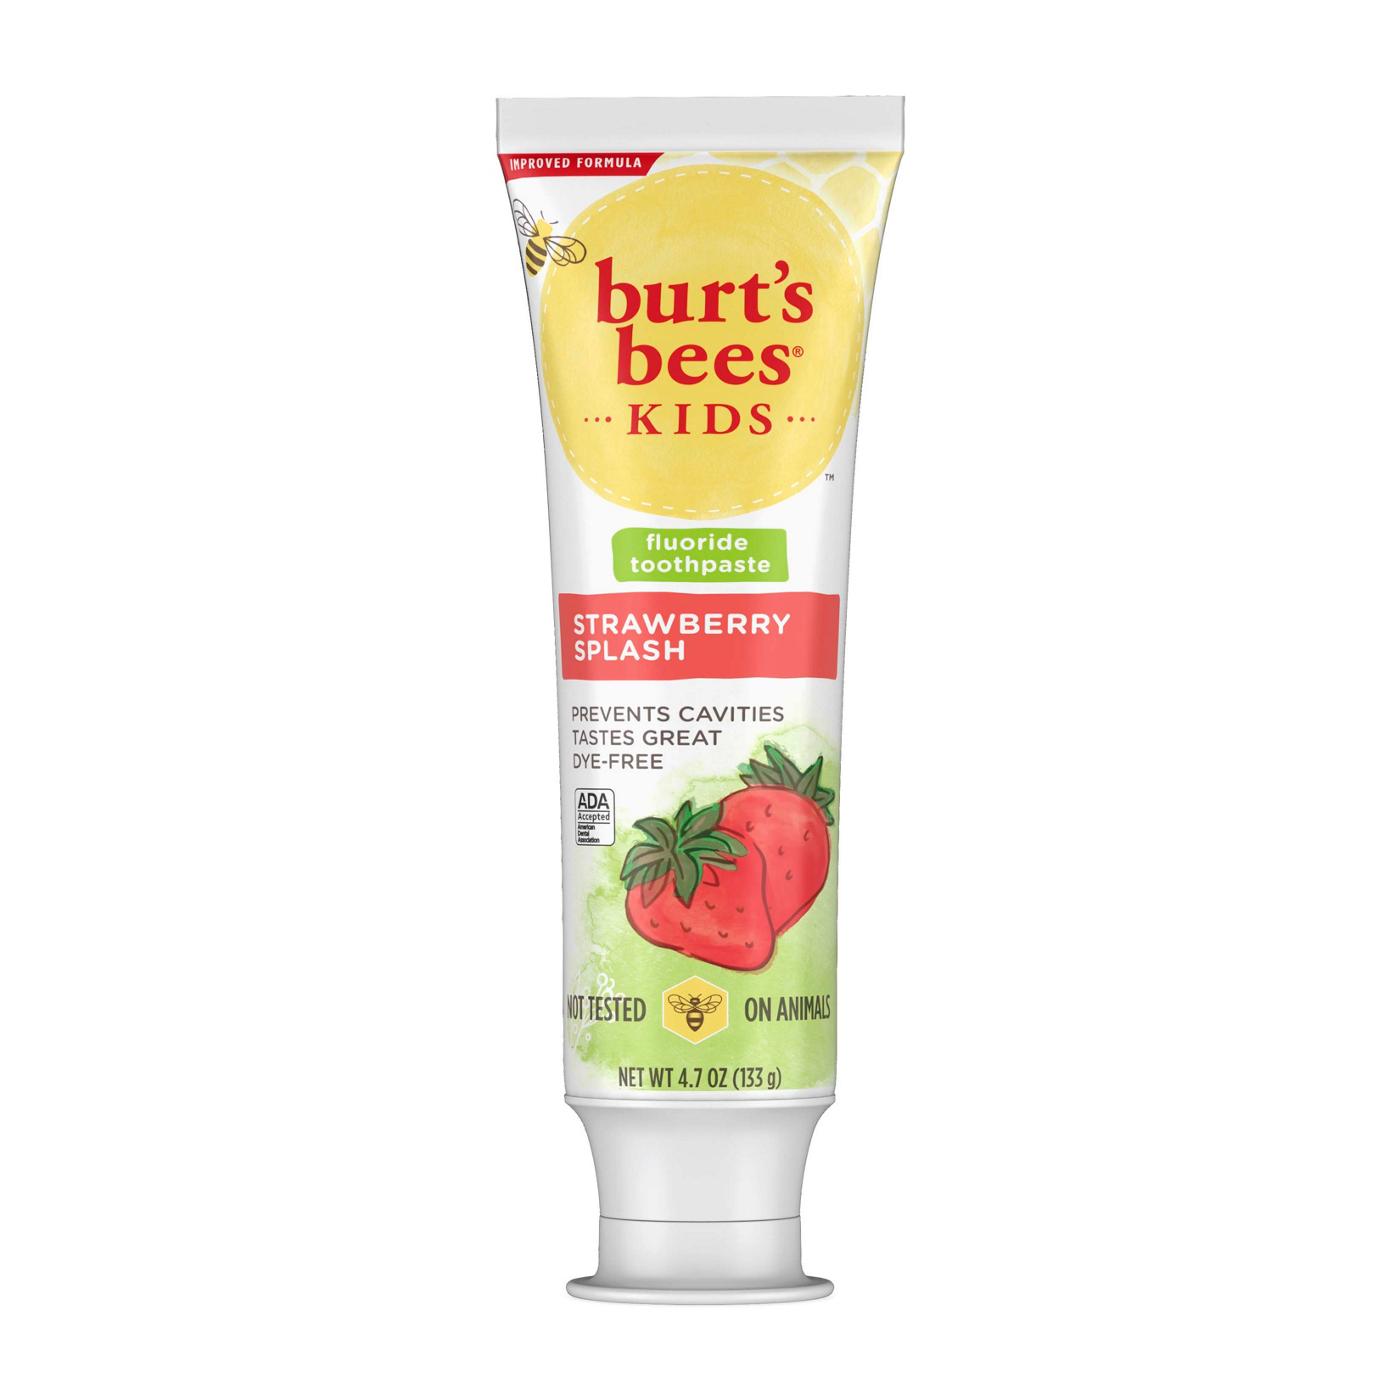 Burt's Bees Kids Fluoride Toothpaste - Strawberry Splash; image 1 of 8